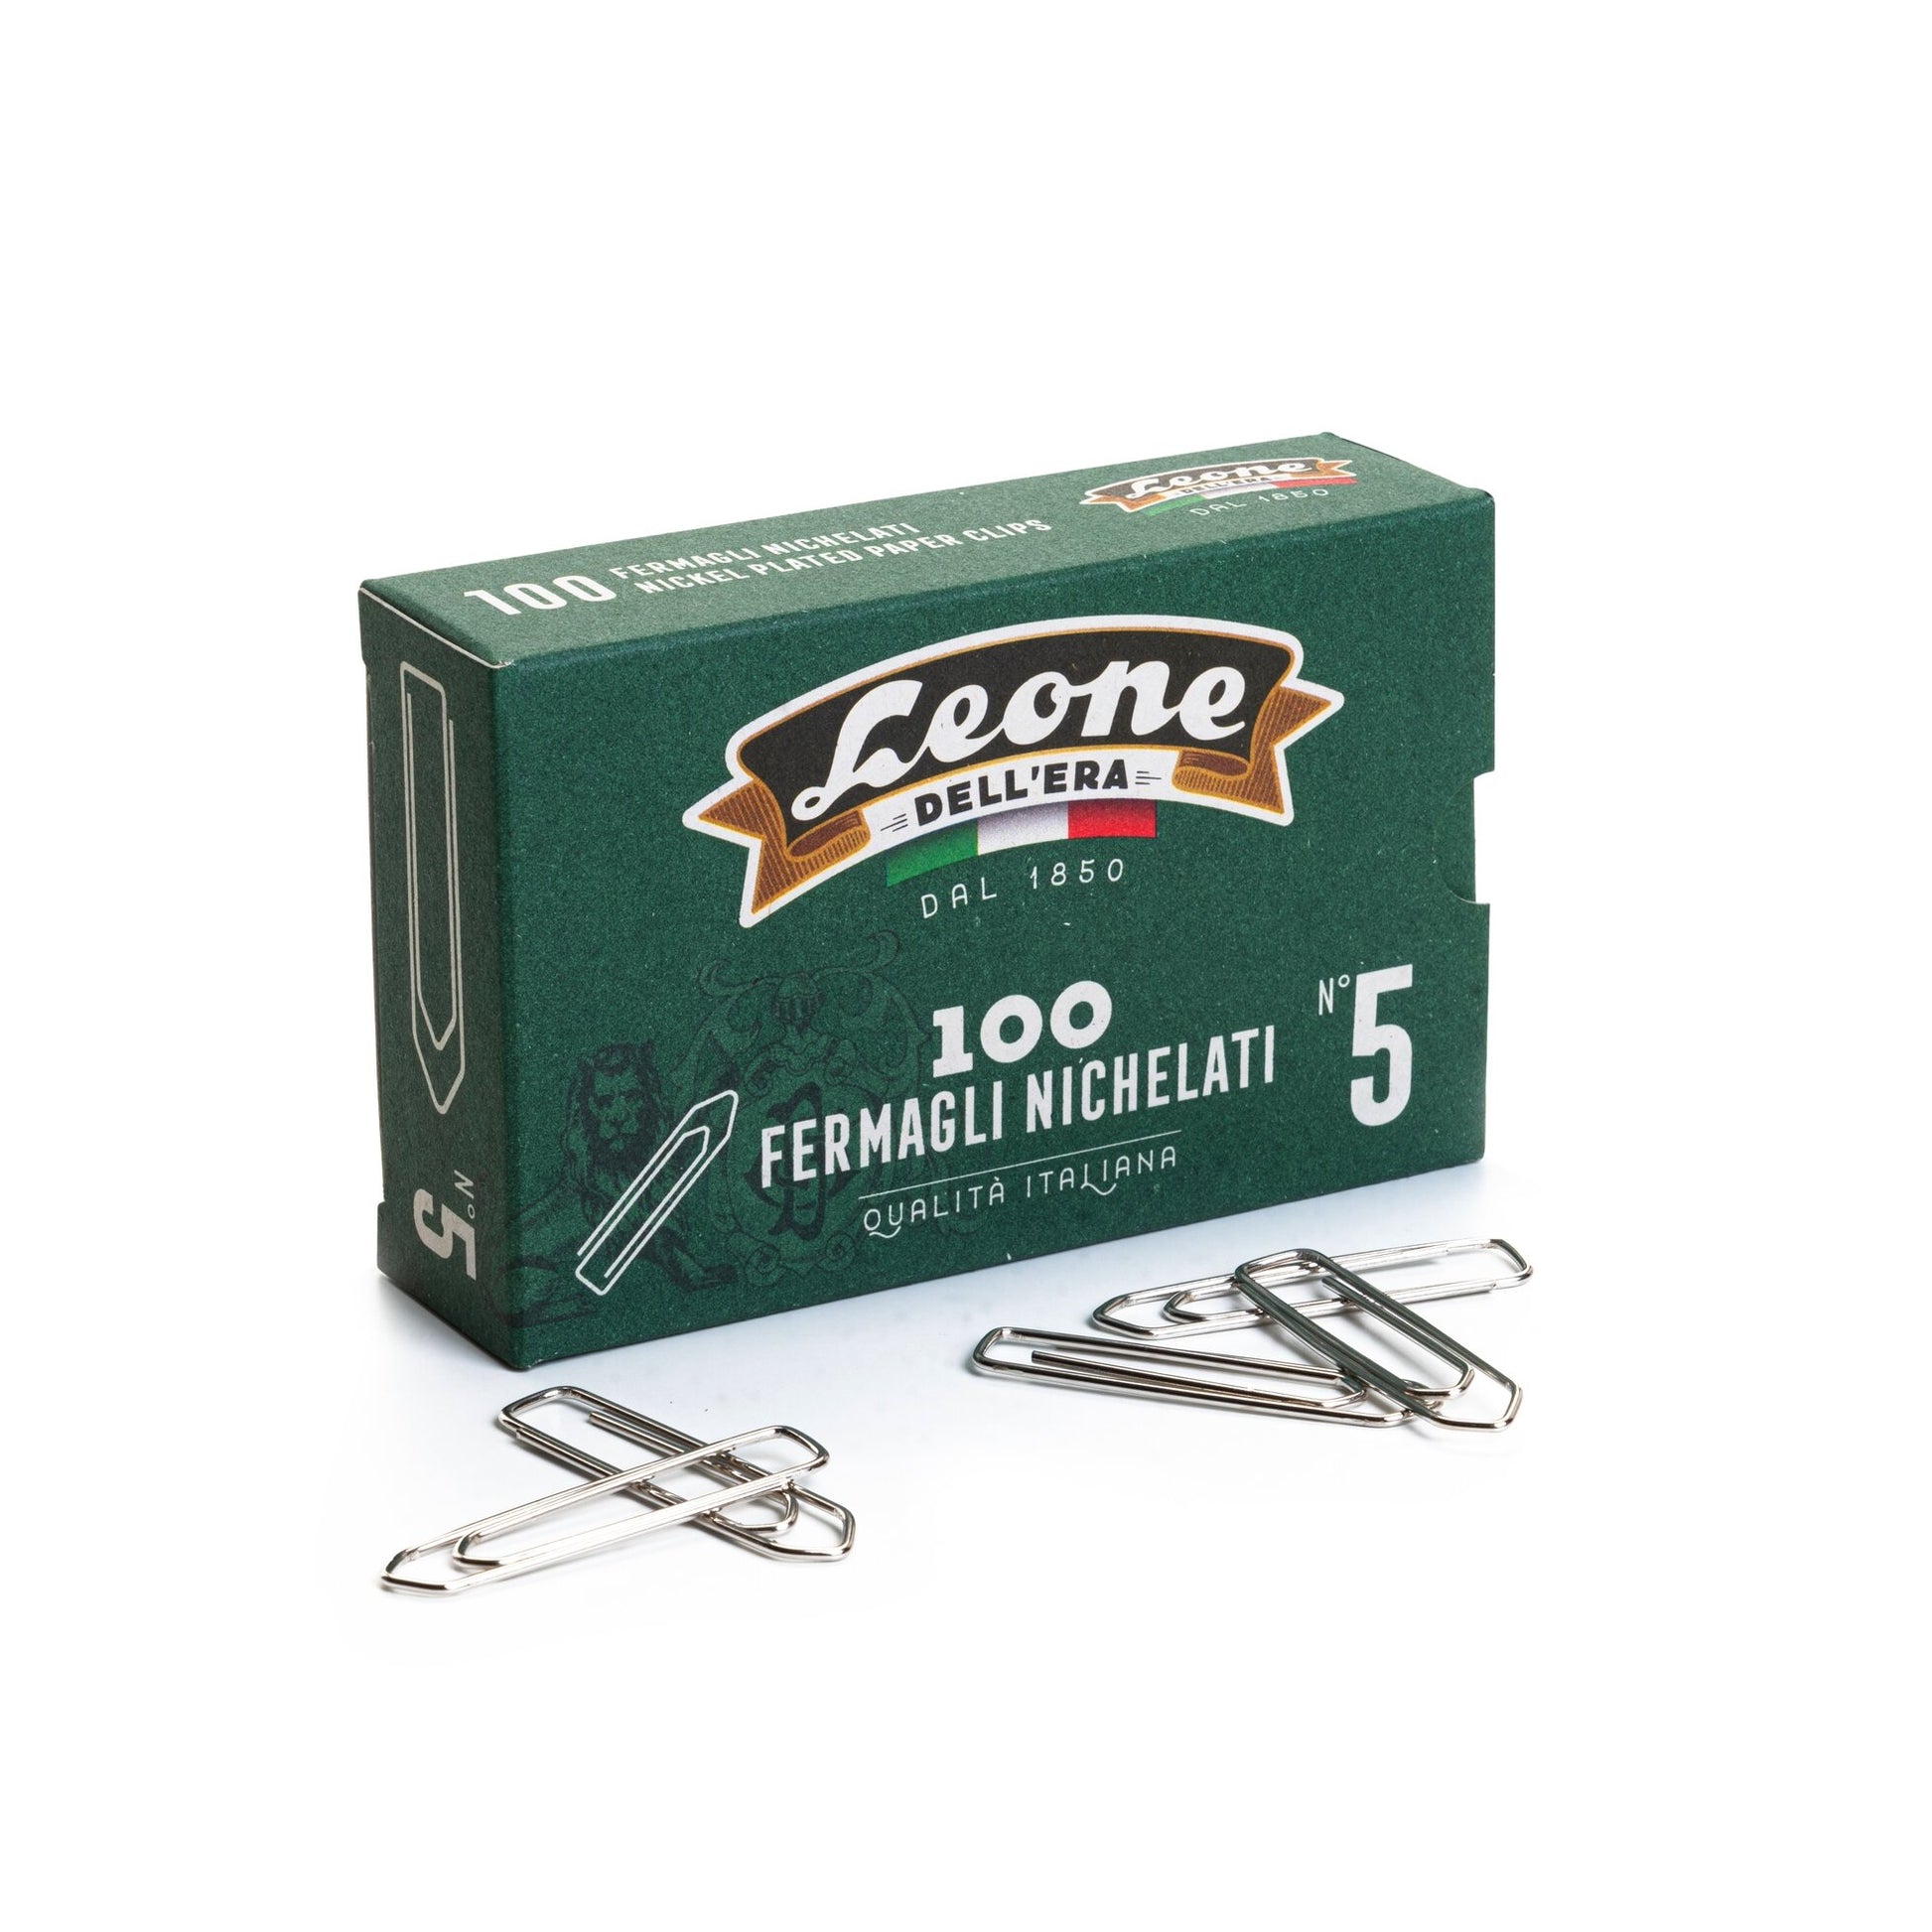 Leone dell'era paper clips. paper clips made in italy size 5 green box